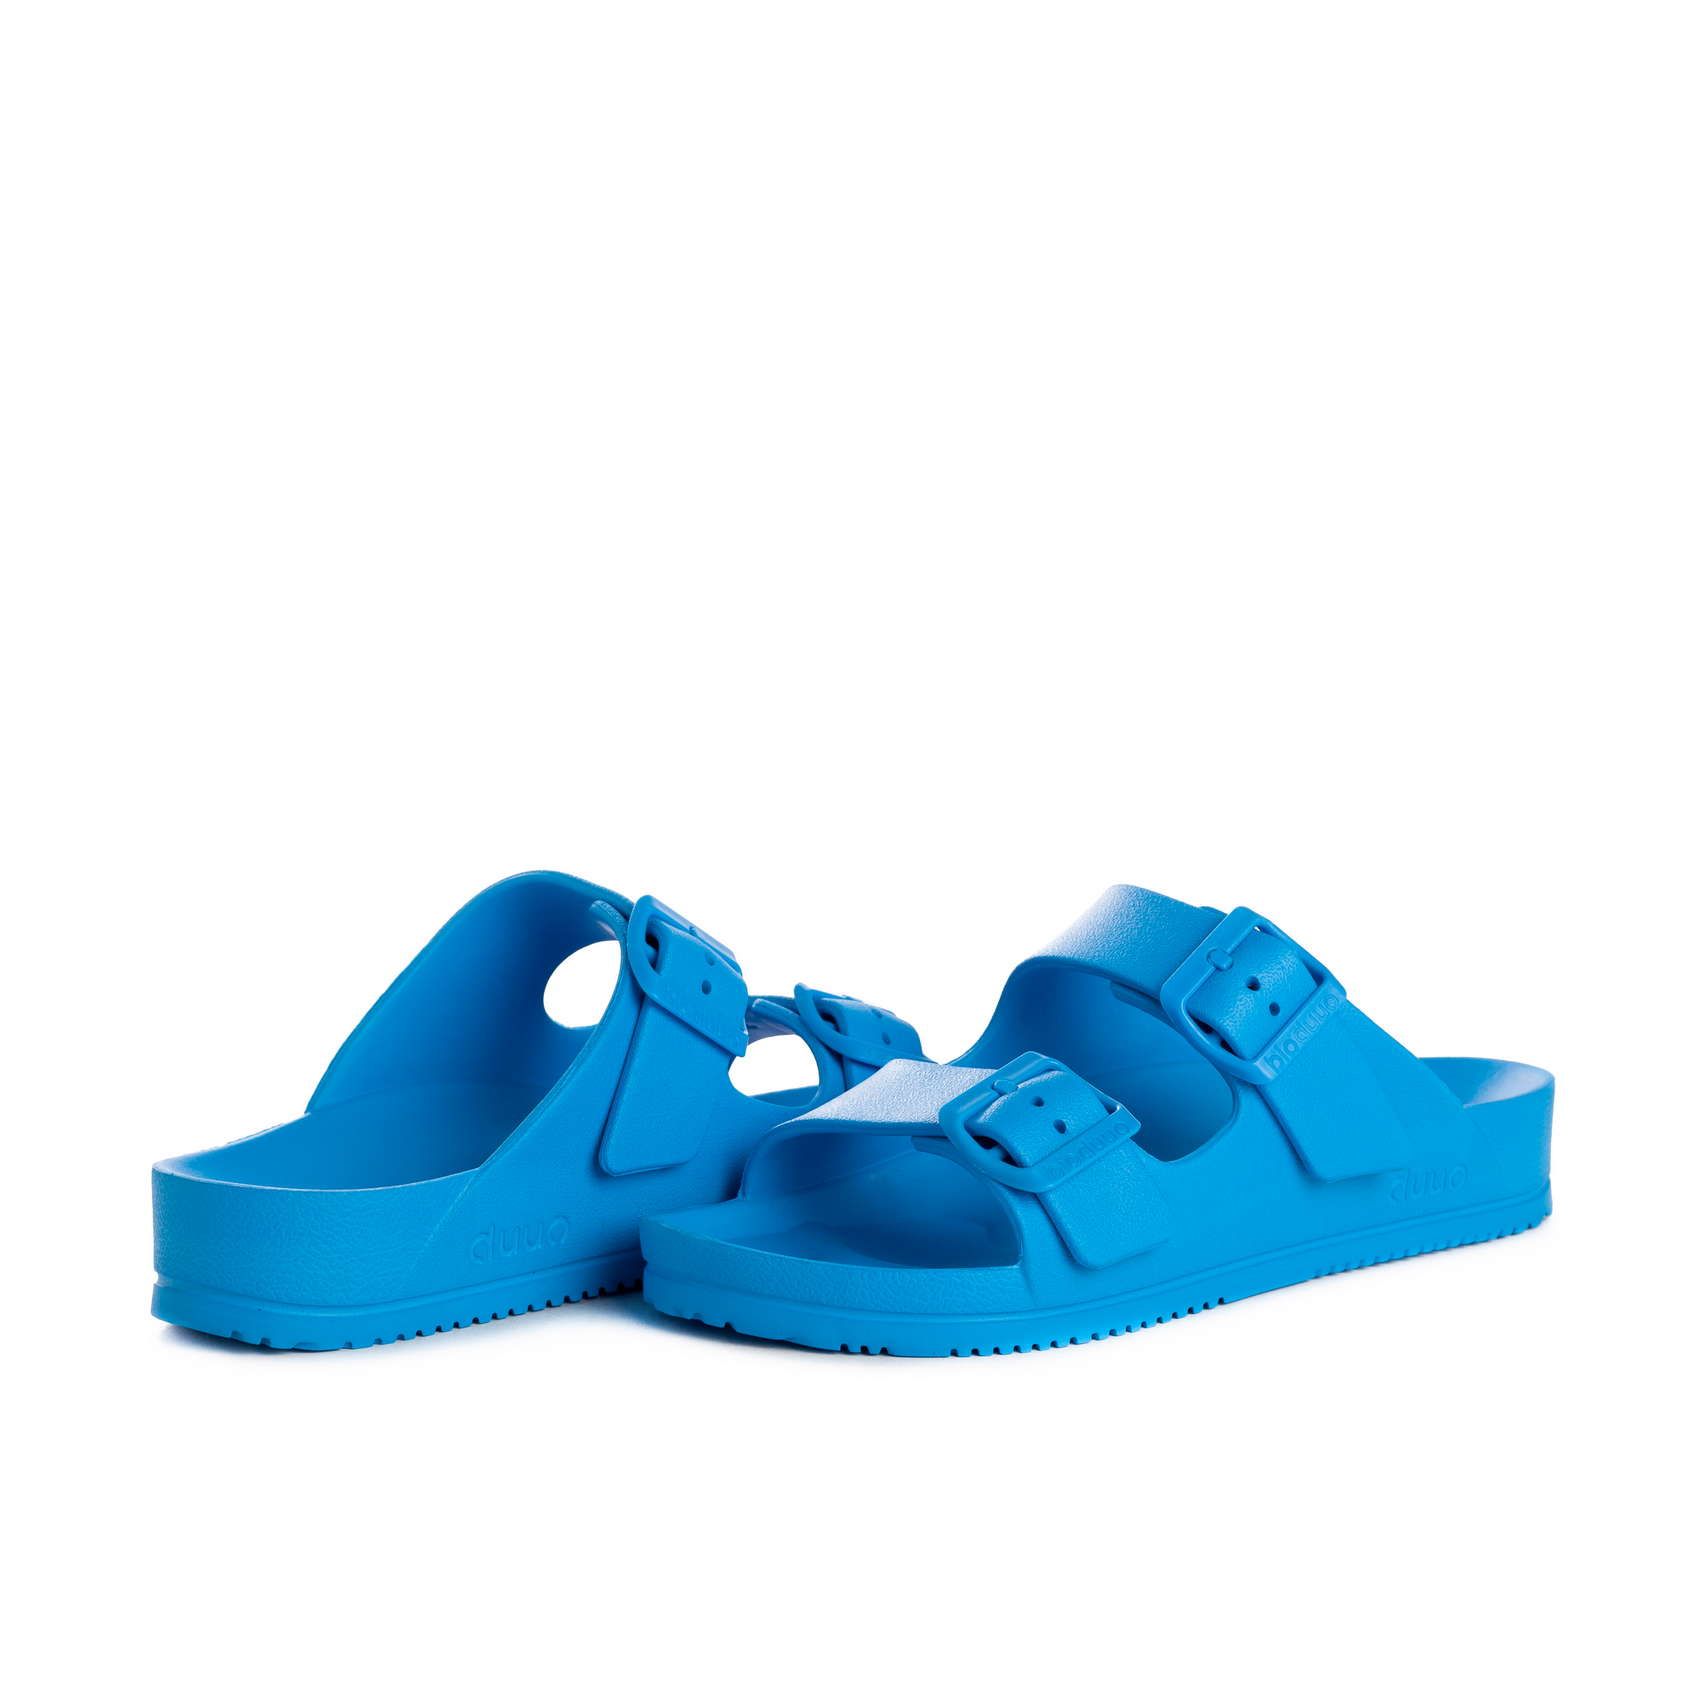 Flat sandal block color in blue